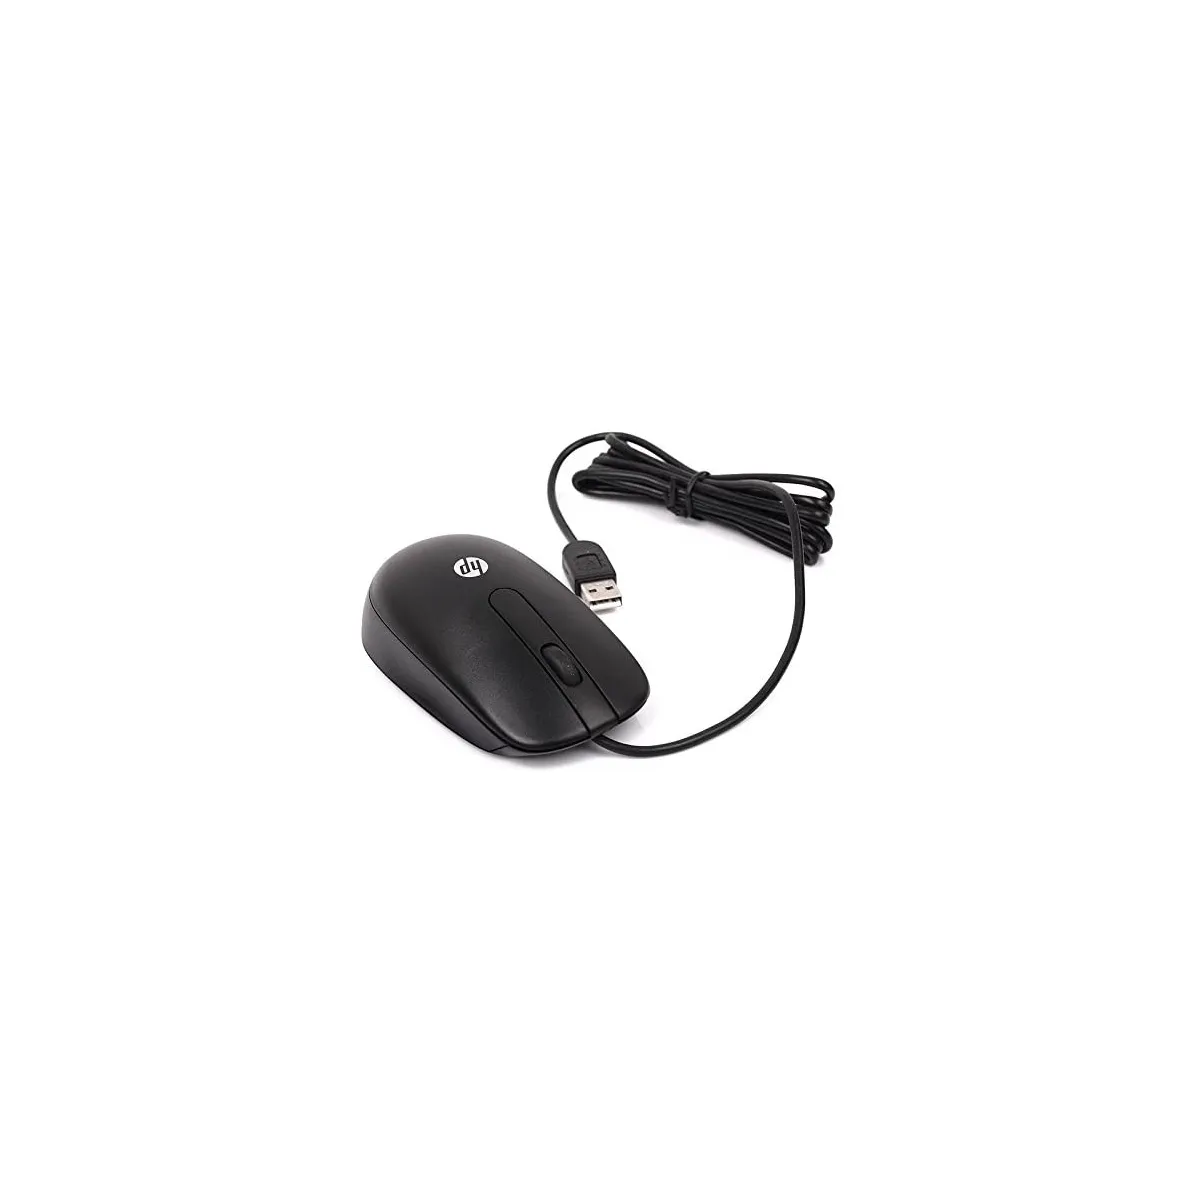 HP Black Optical Mouse USB New